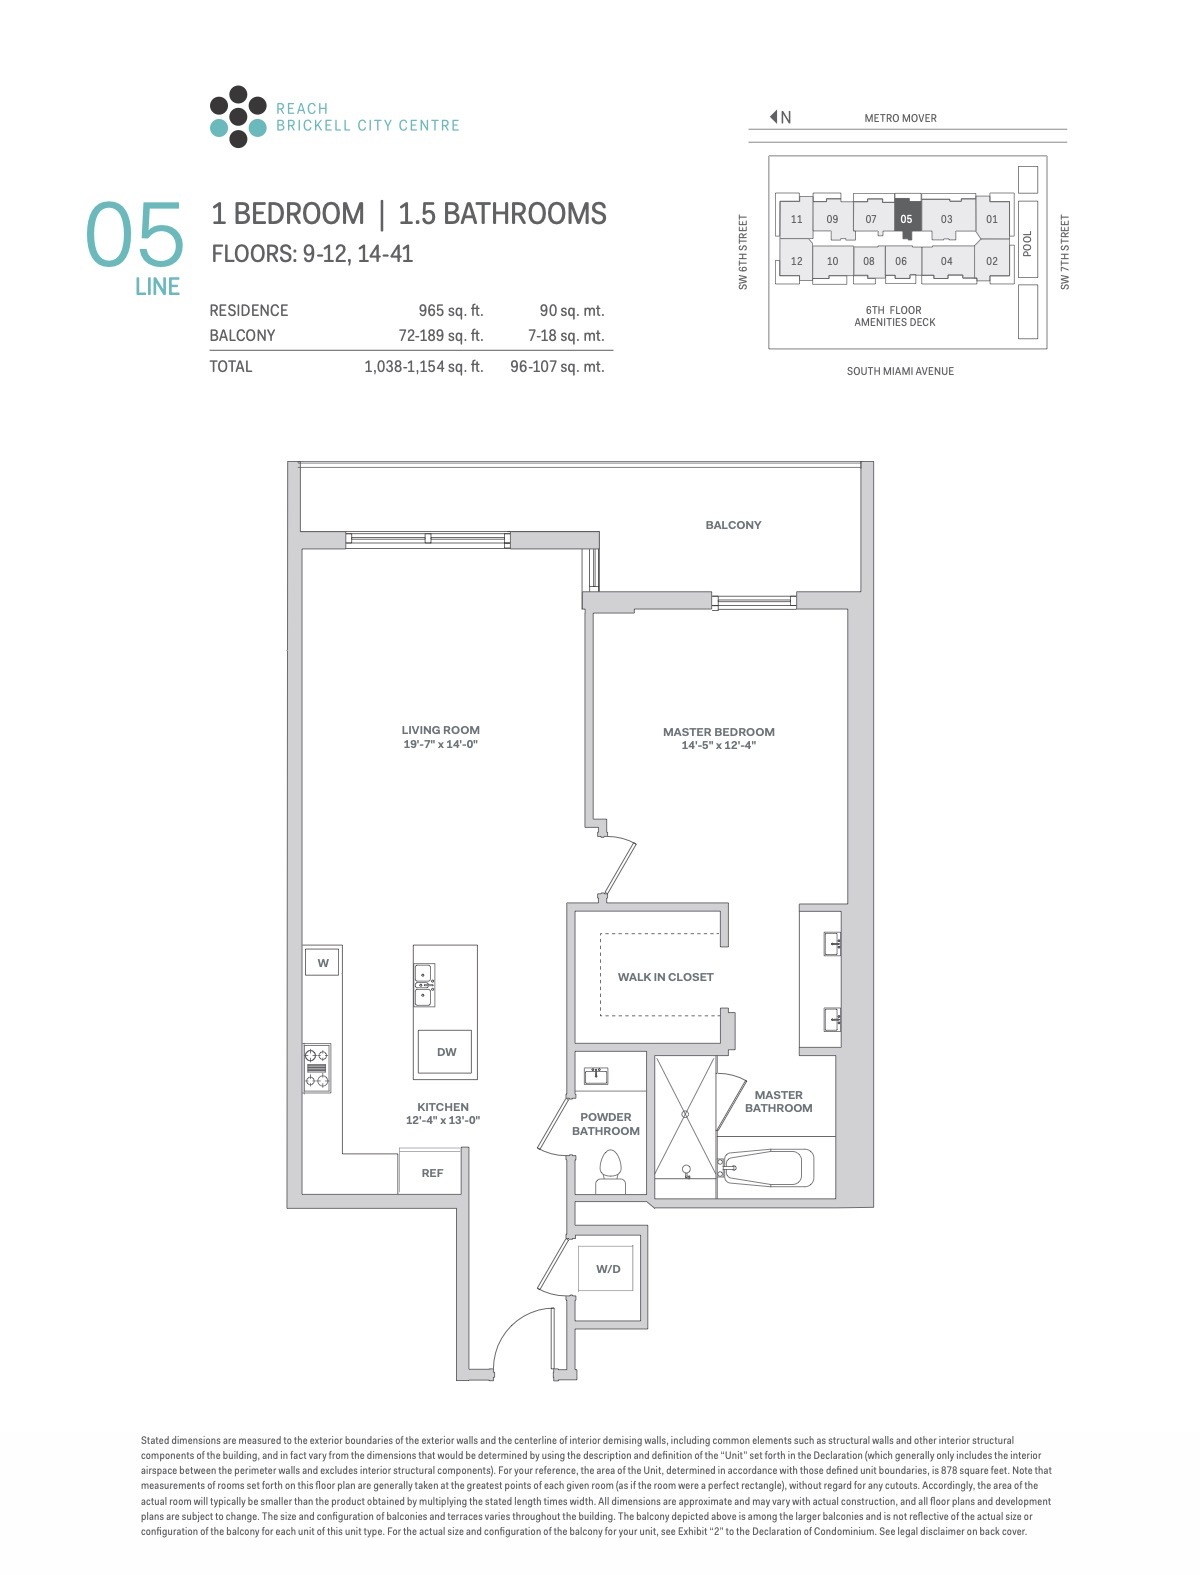 Floor Plan for Reach Brickell City Centre, Line 05